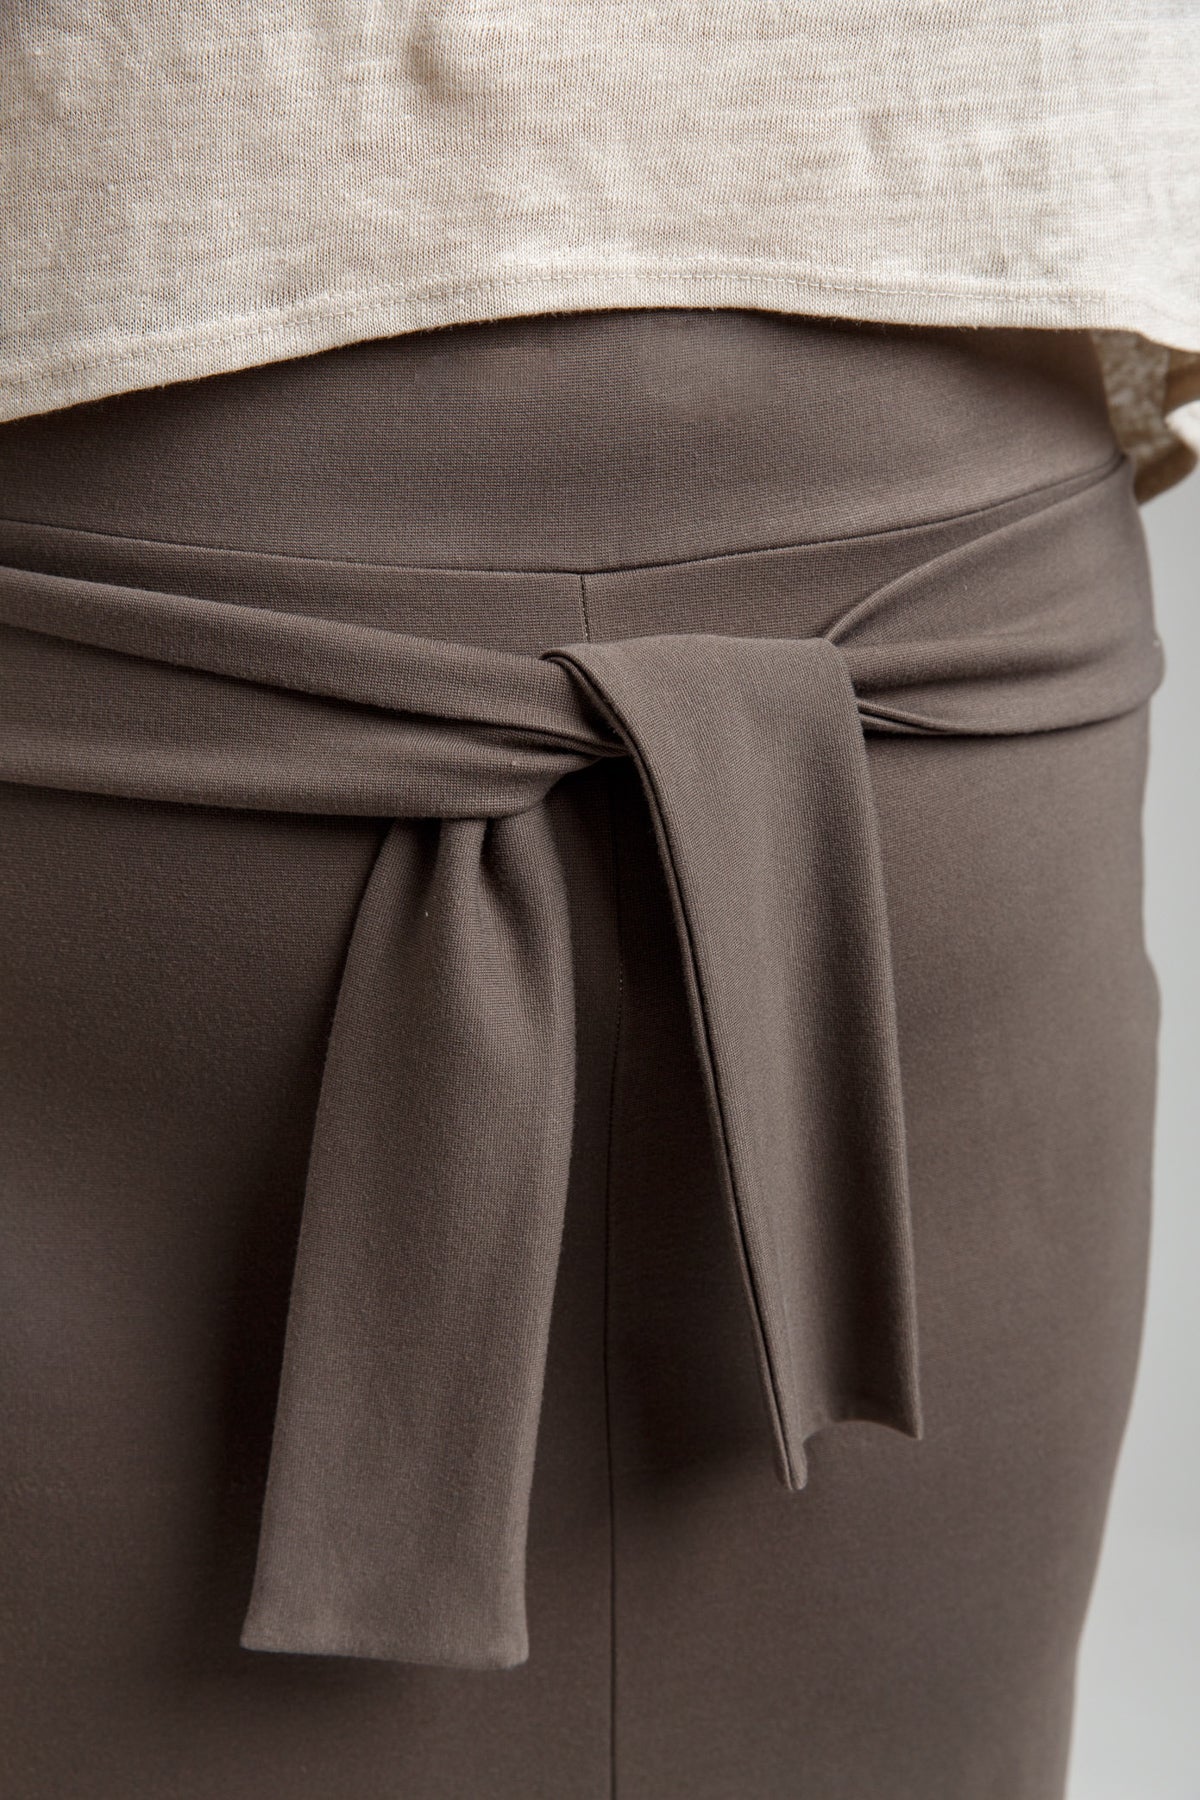 Axel Curve Skirt Sewing Pattern | Megan Nielsen Patterns